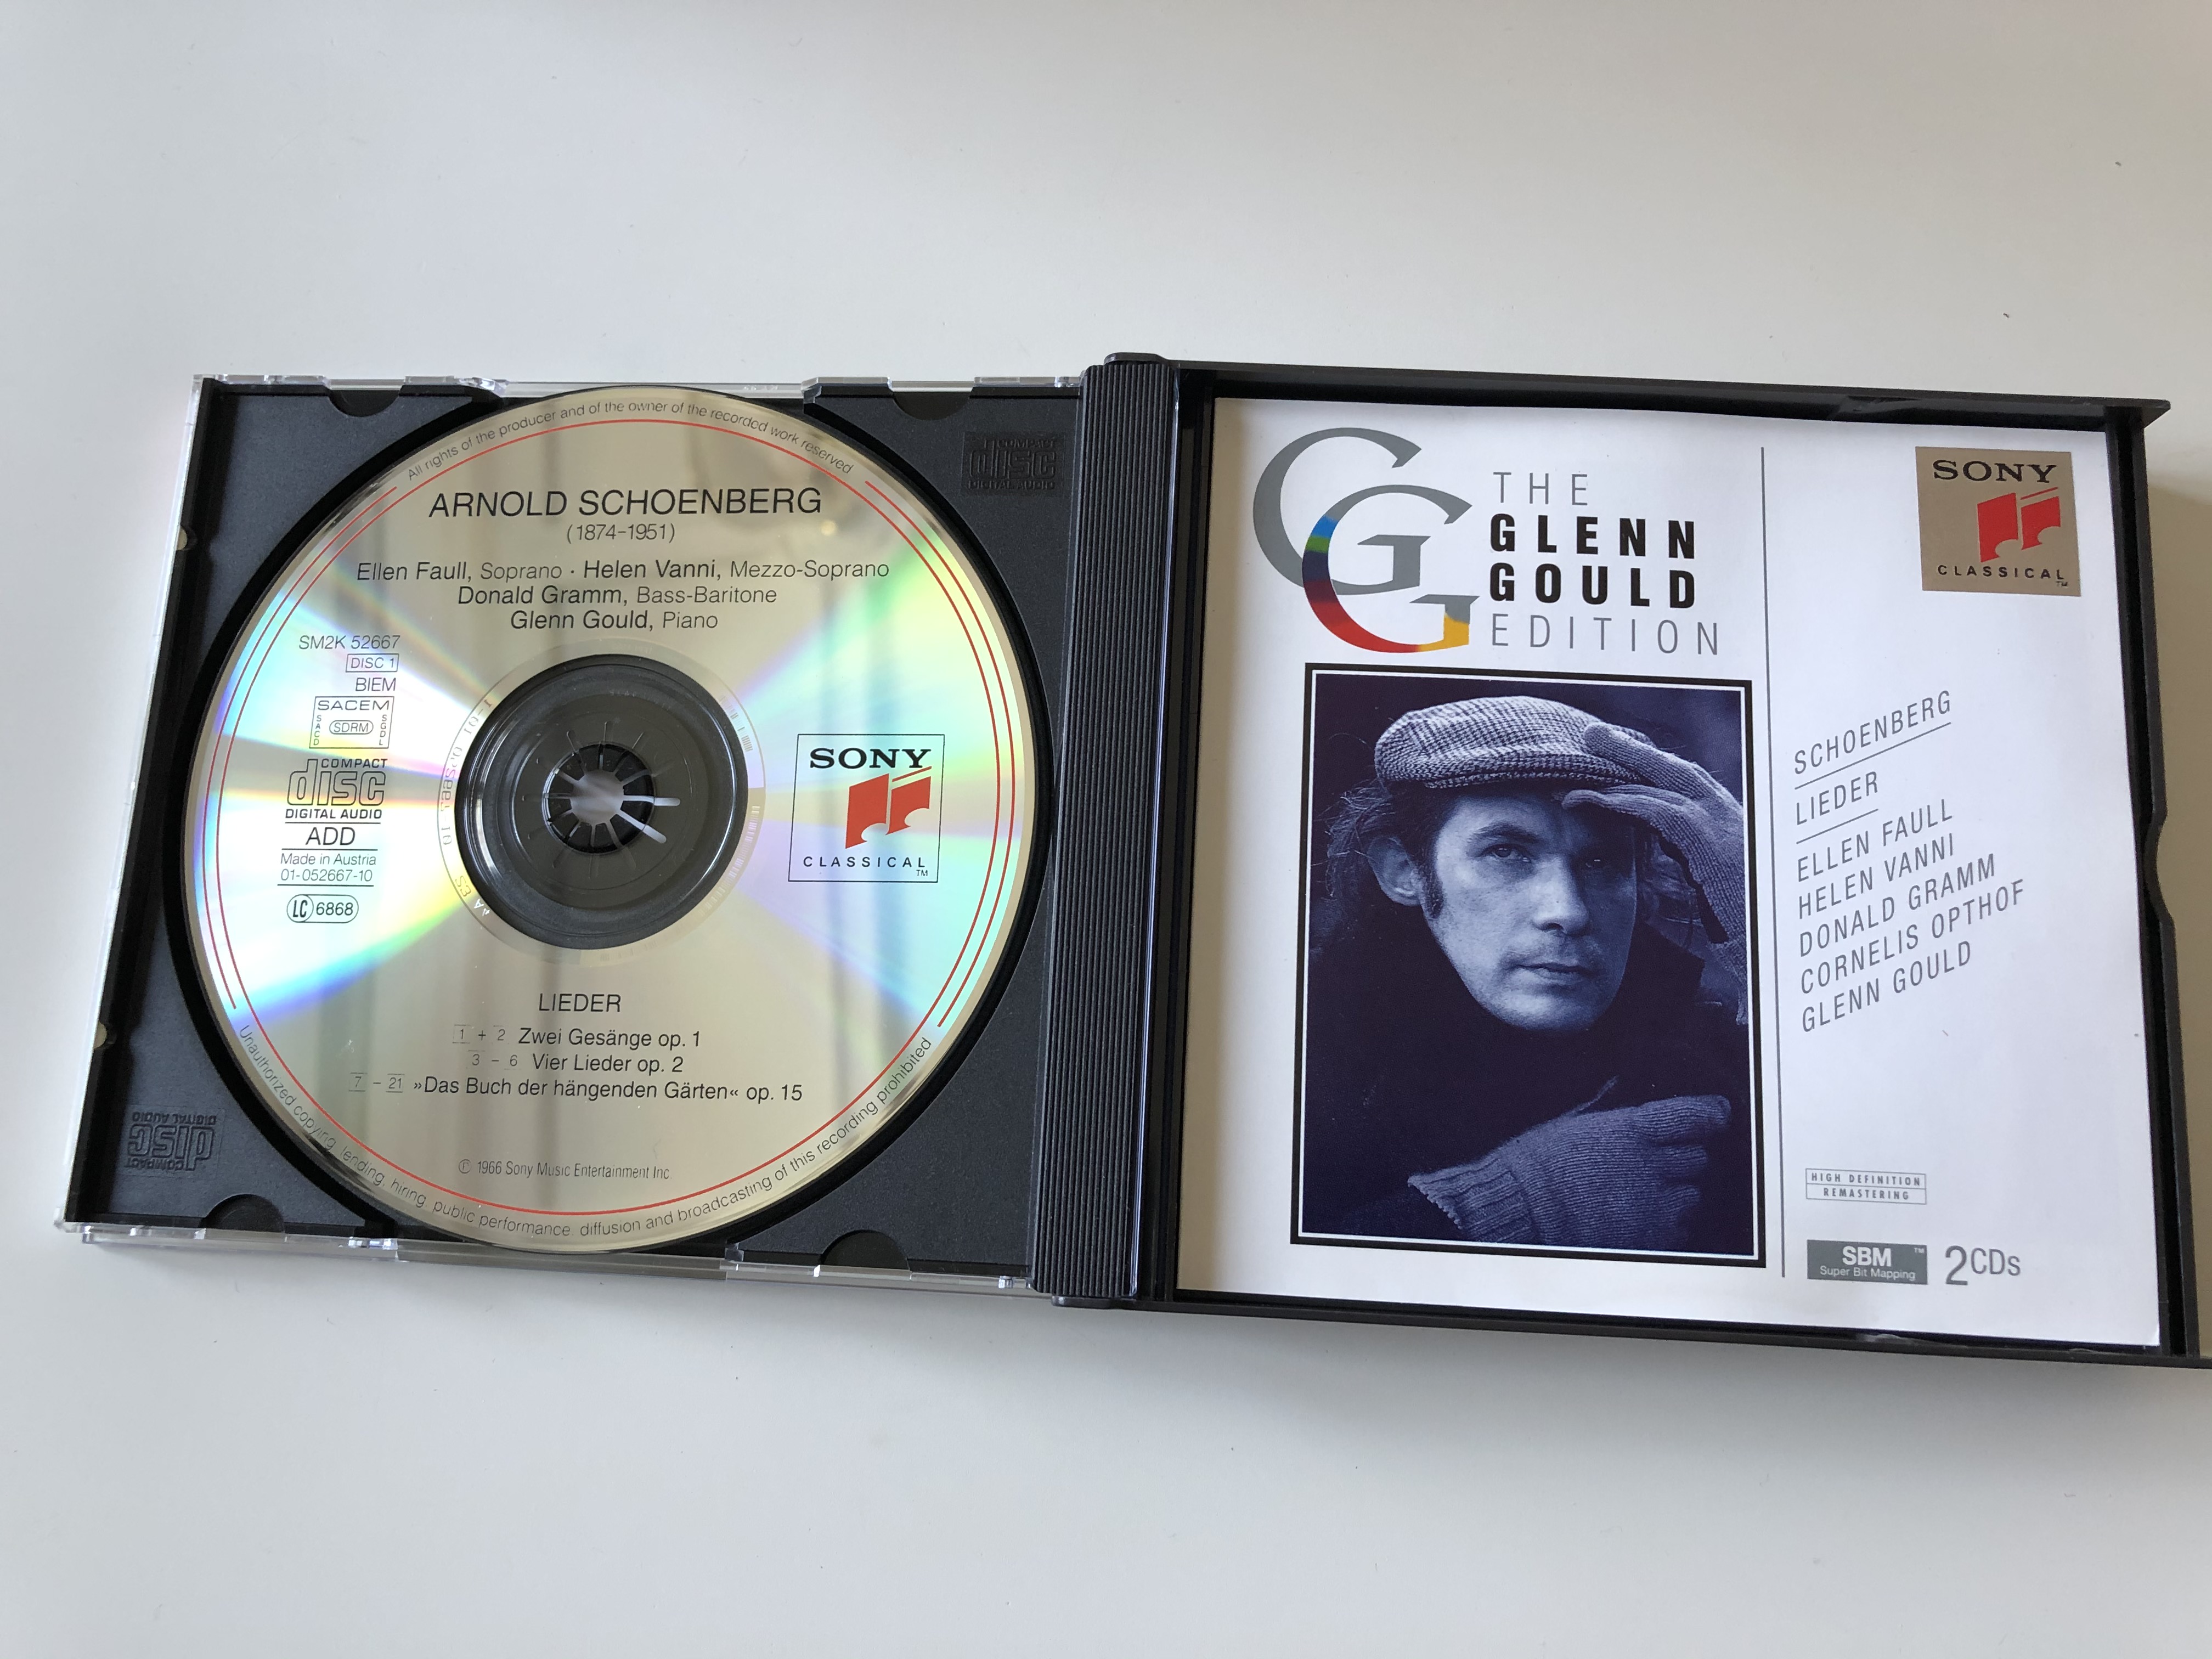 the-glenn-gould-edition-schoenberg-lieder-ellen-faull-helen-vanni-donald-gramm-cornelius-opthof-glenn-gould-sony-classical-2x-audio-cd-1995-sm2k-52667-3-.jpg